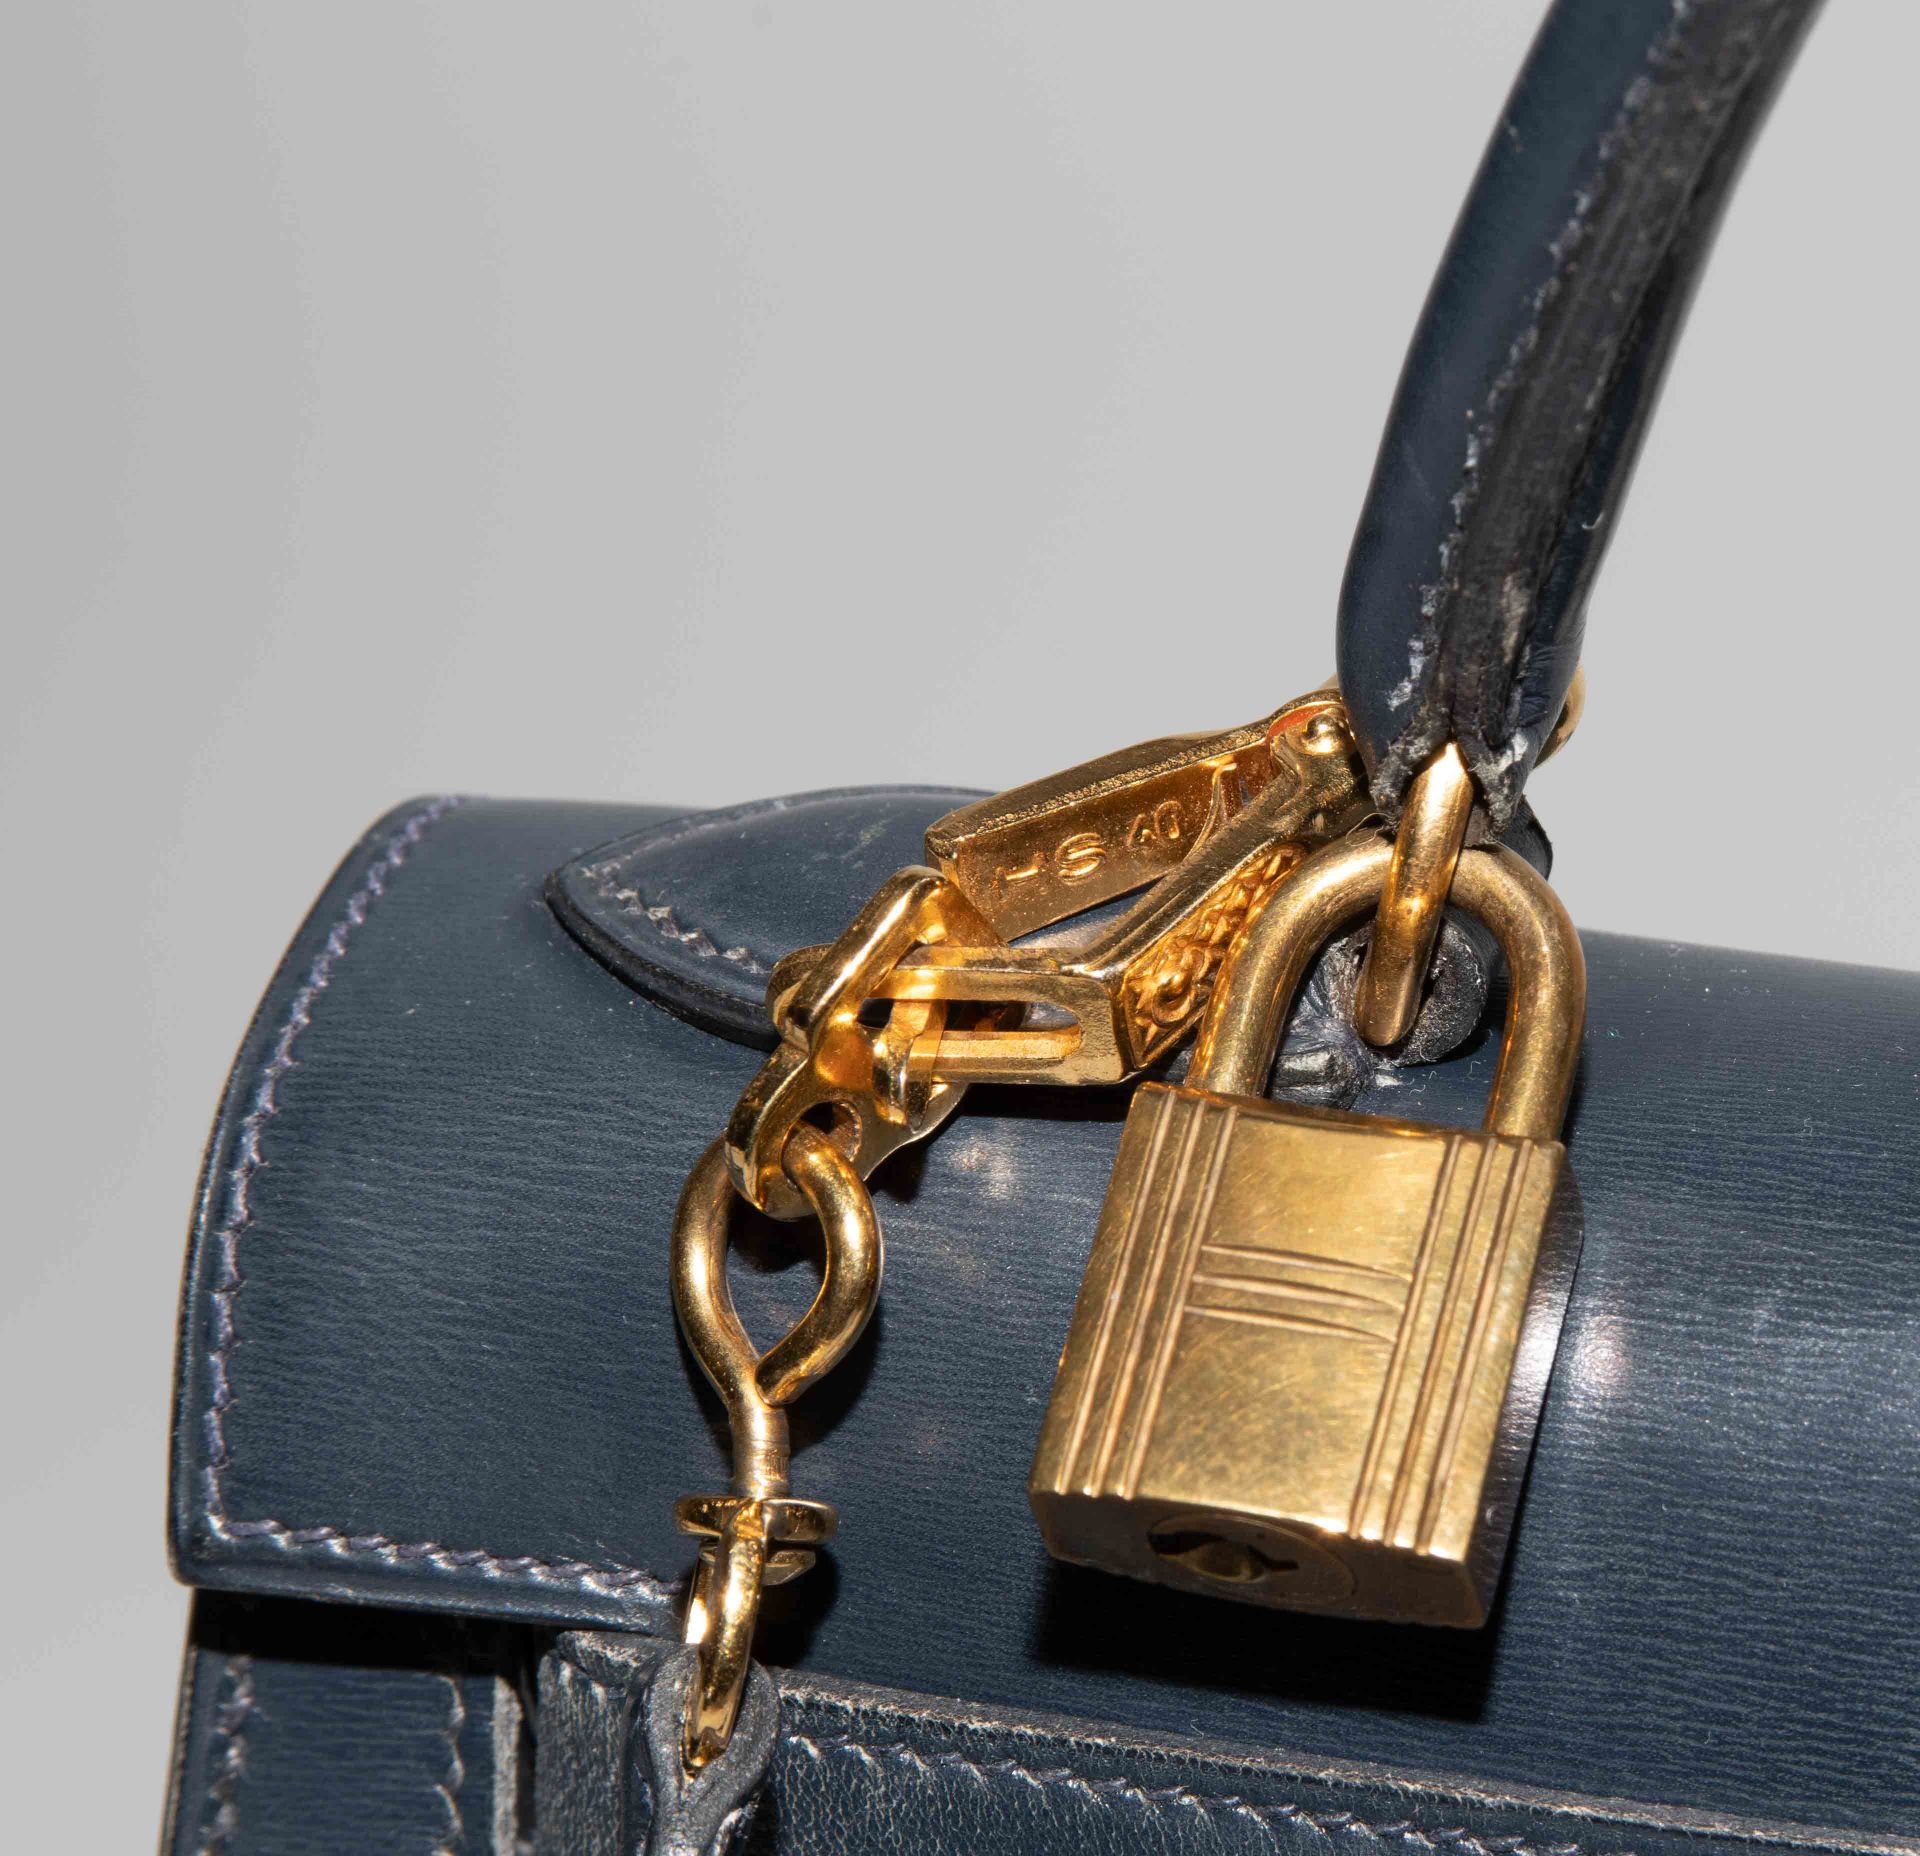 Hermès, Handtasche "Kelly sellier" 28 - Image 14 of 24